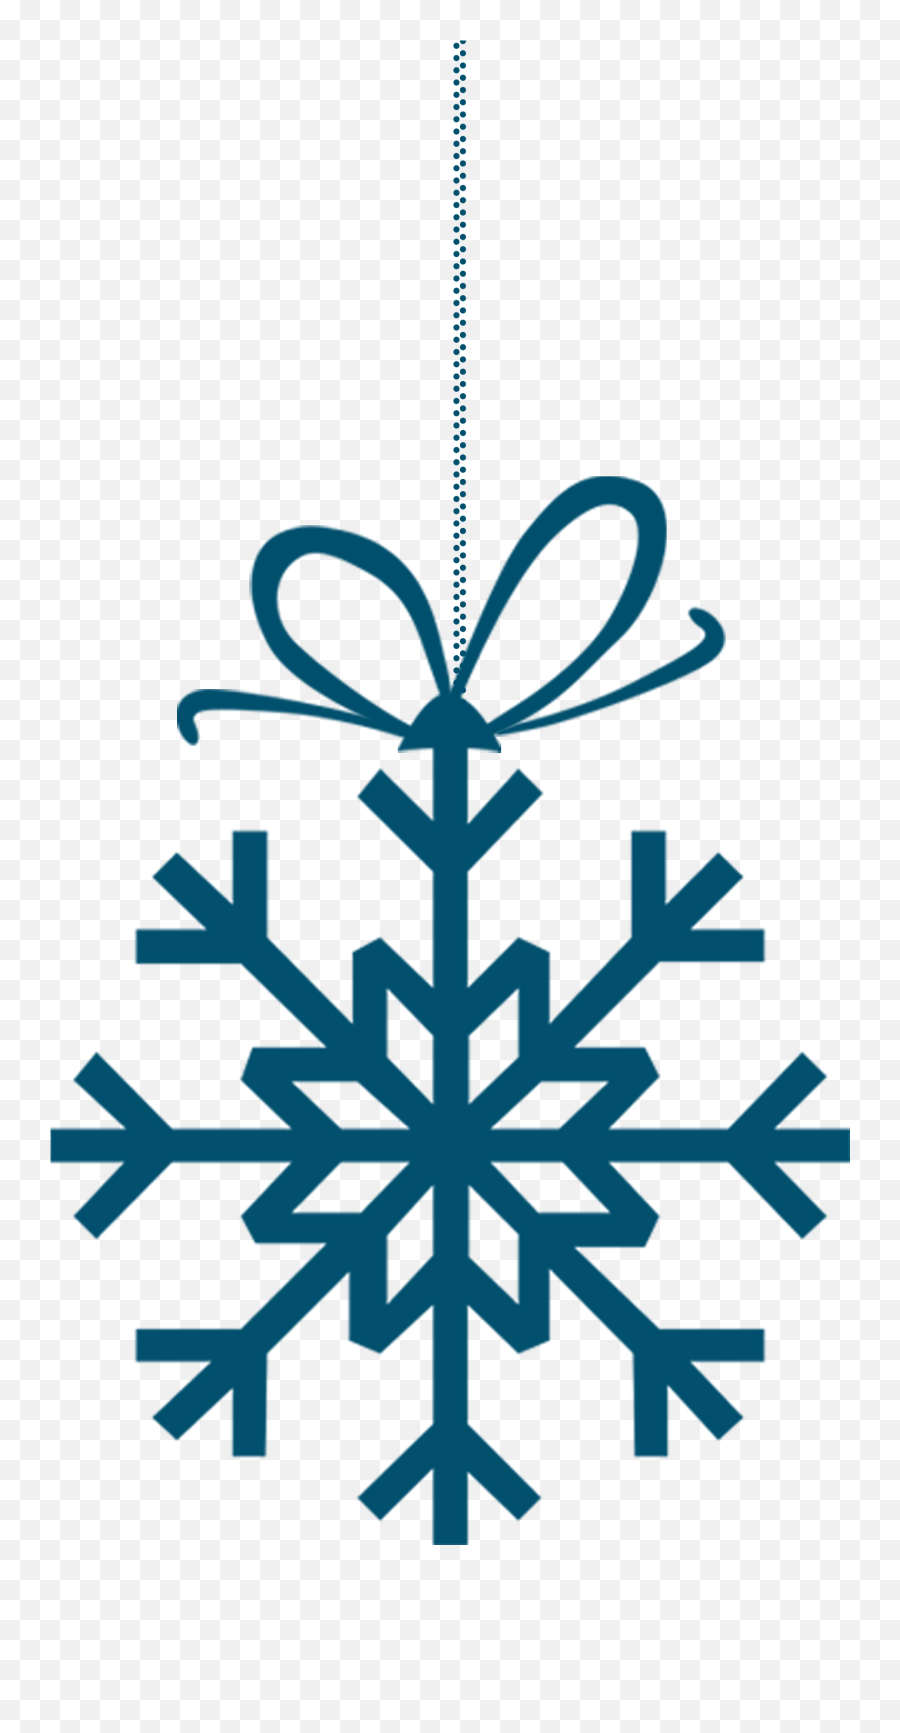 Snowflake Png Images Snowflakes Snowdrop Snowdrops 92 Emoji,Christmas Snowflakes Png